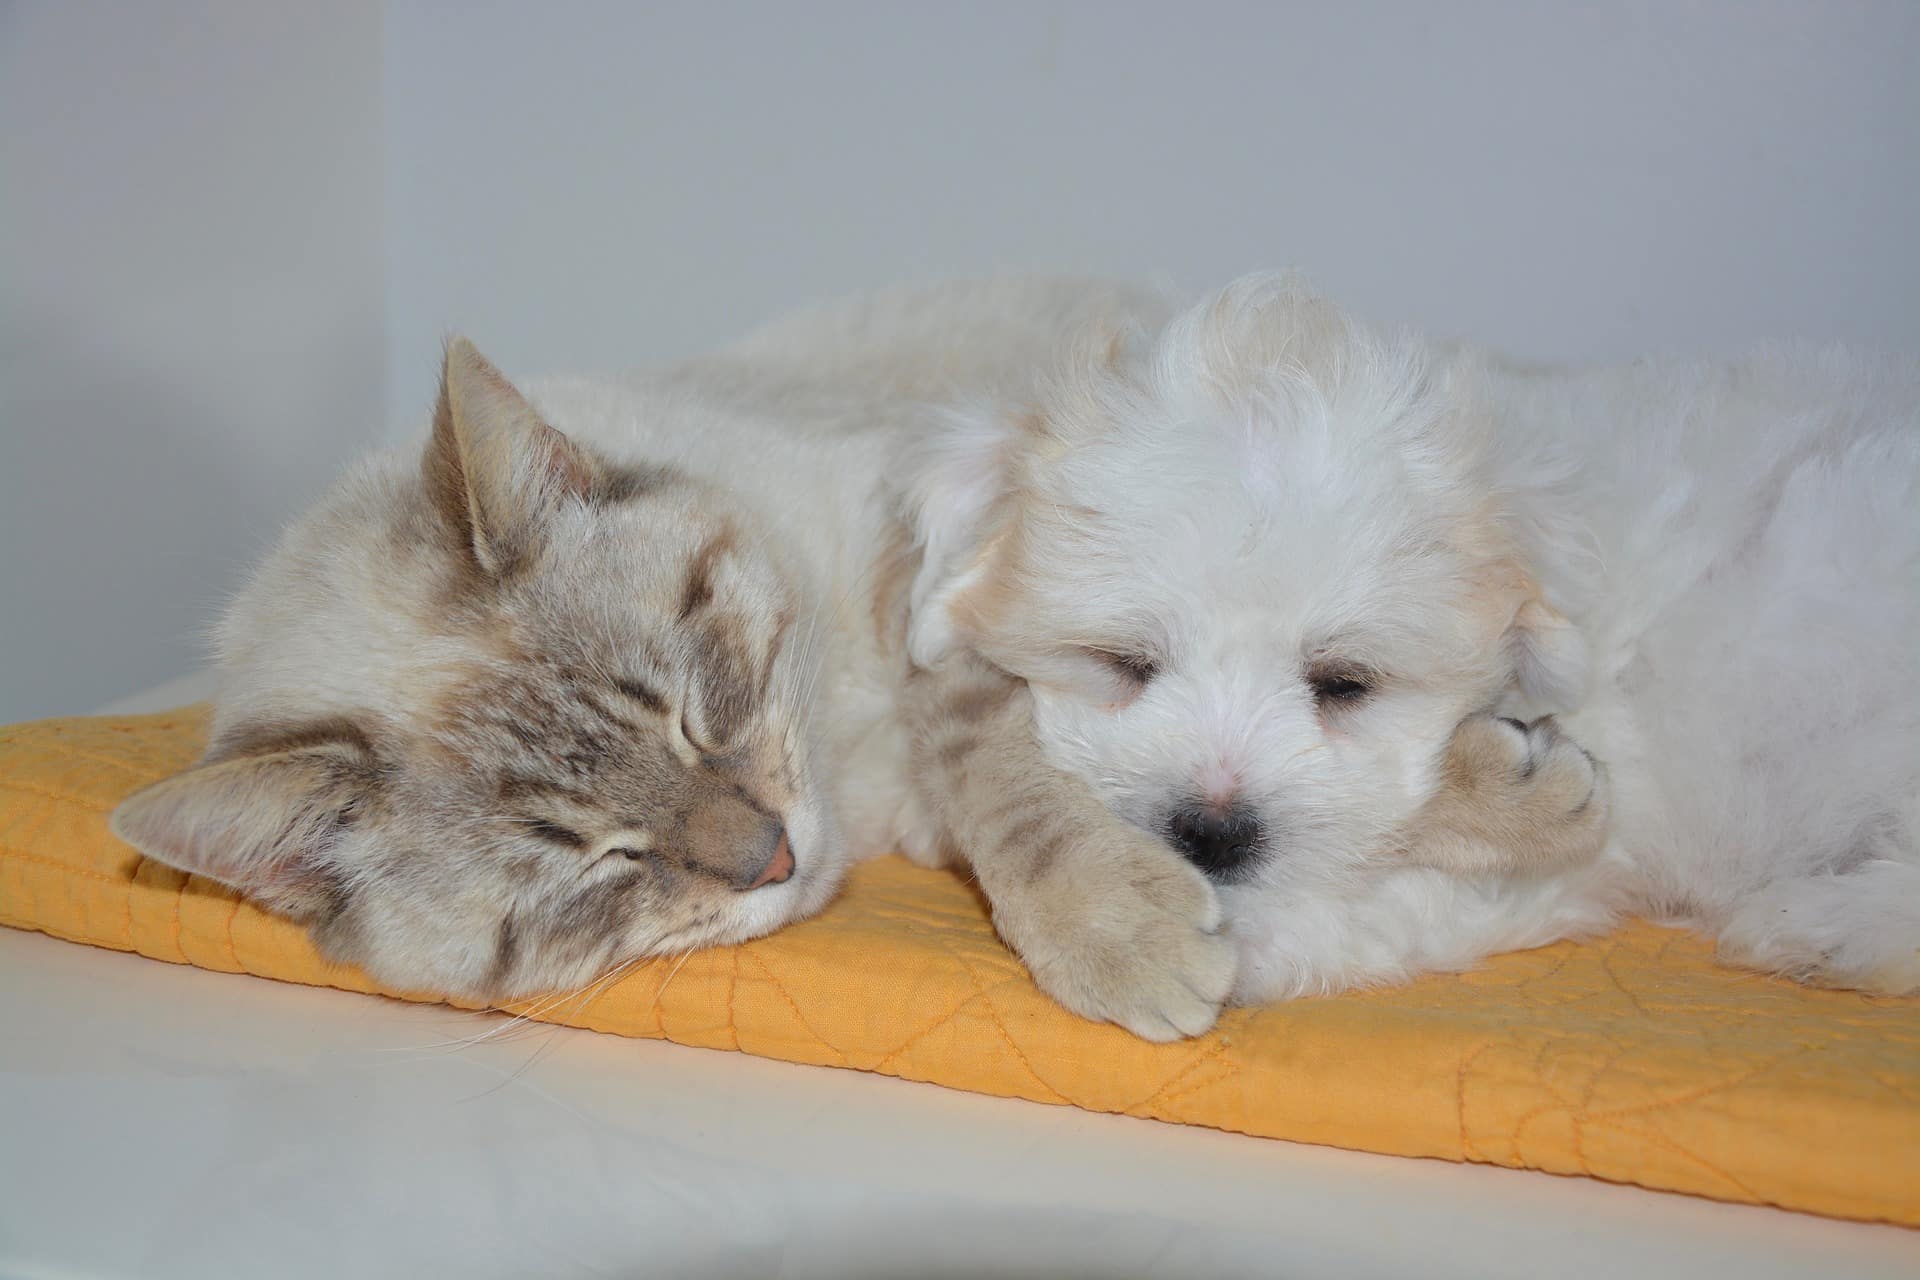 Cat lying next to puppy